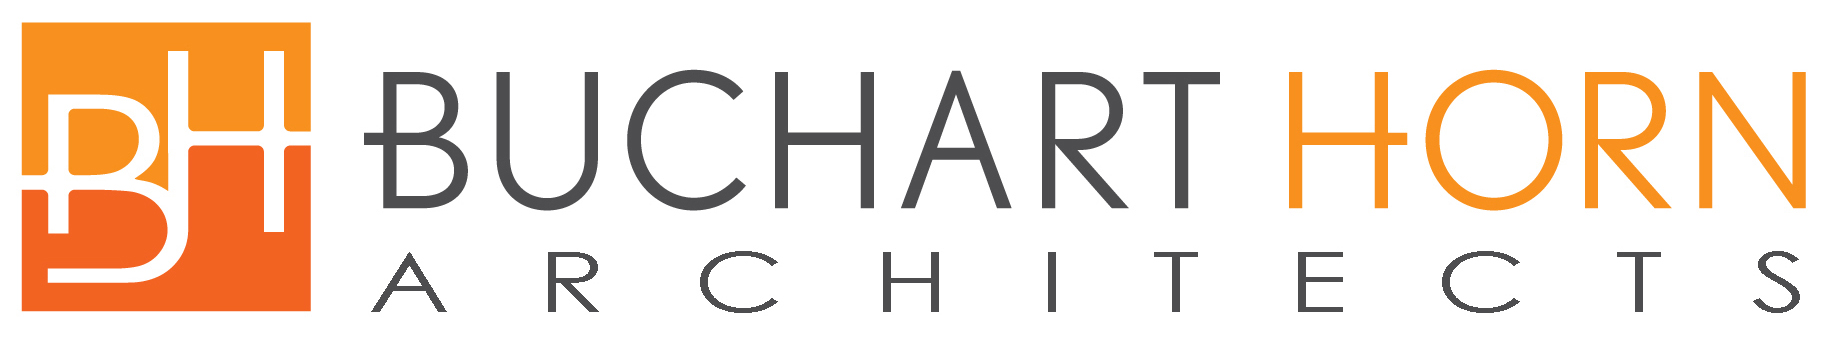 Buchart Horn Architects logo